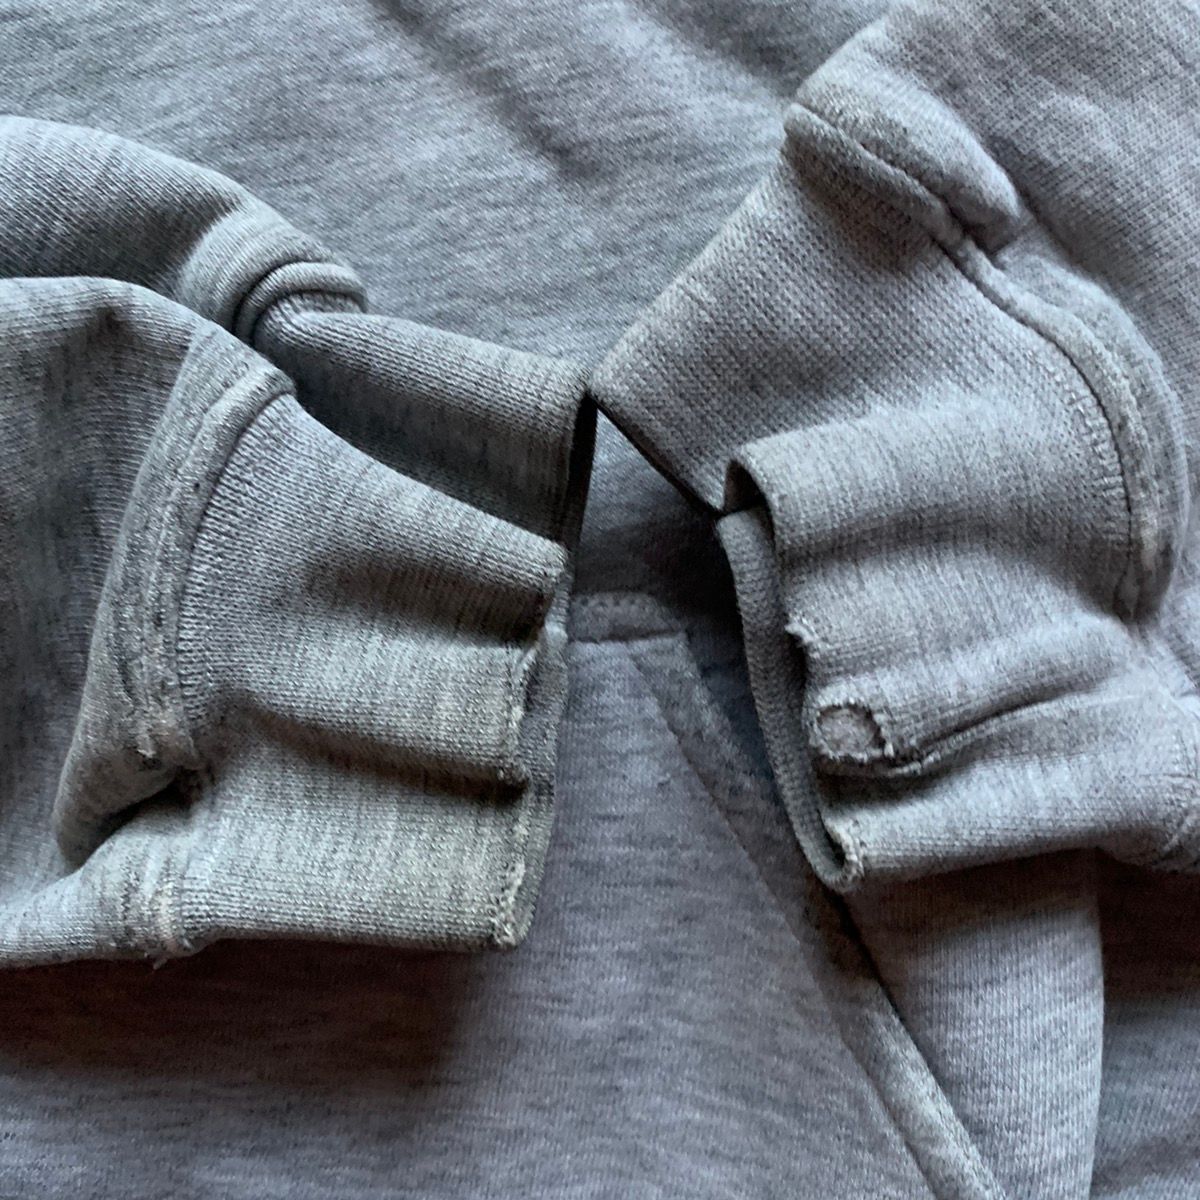 Nike Vintage 90s Nike embroidered swoosh hoodie sweater grey rare Size US M / EU 48-50 / 2 - 6 Thumbnail